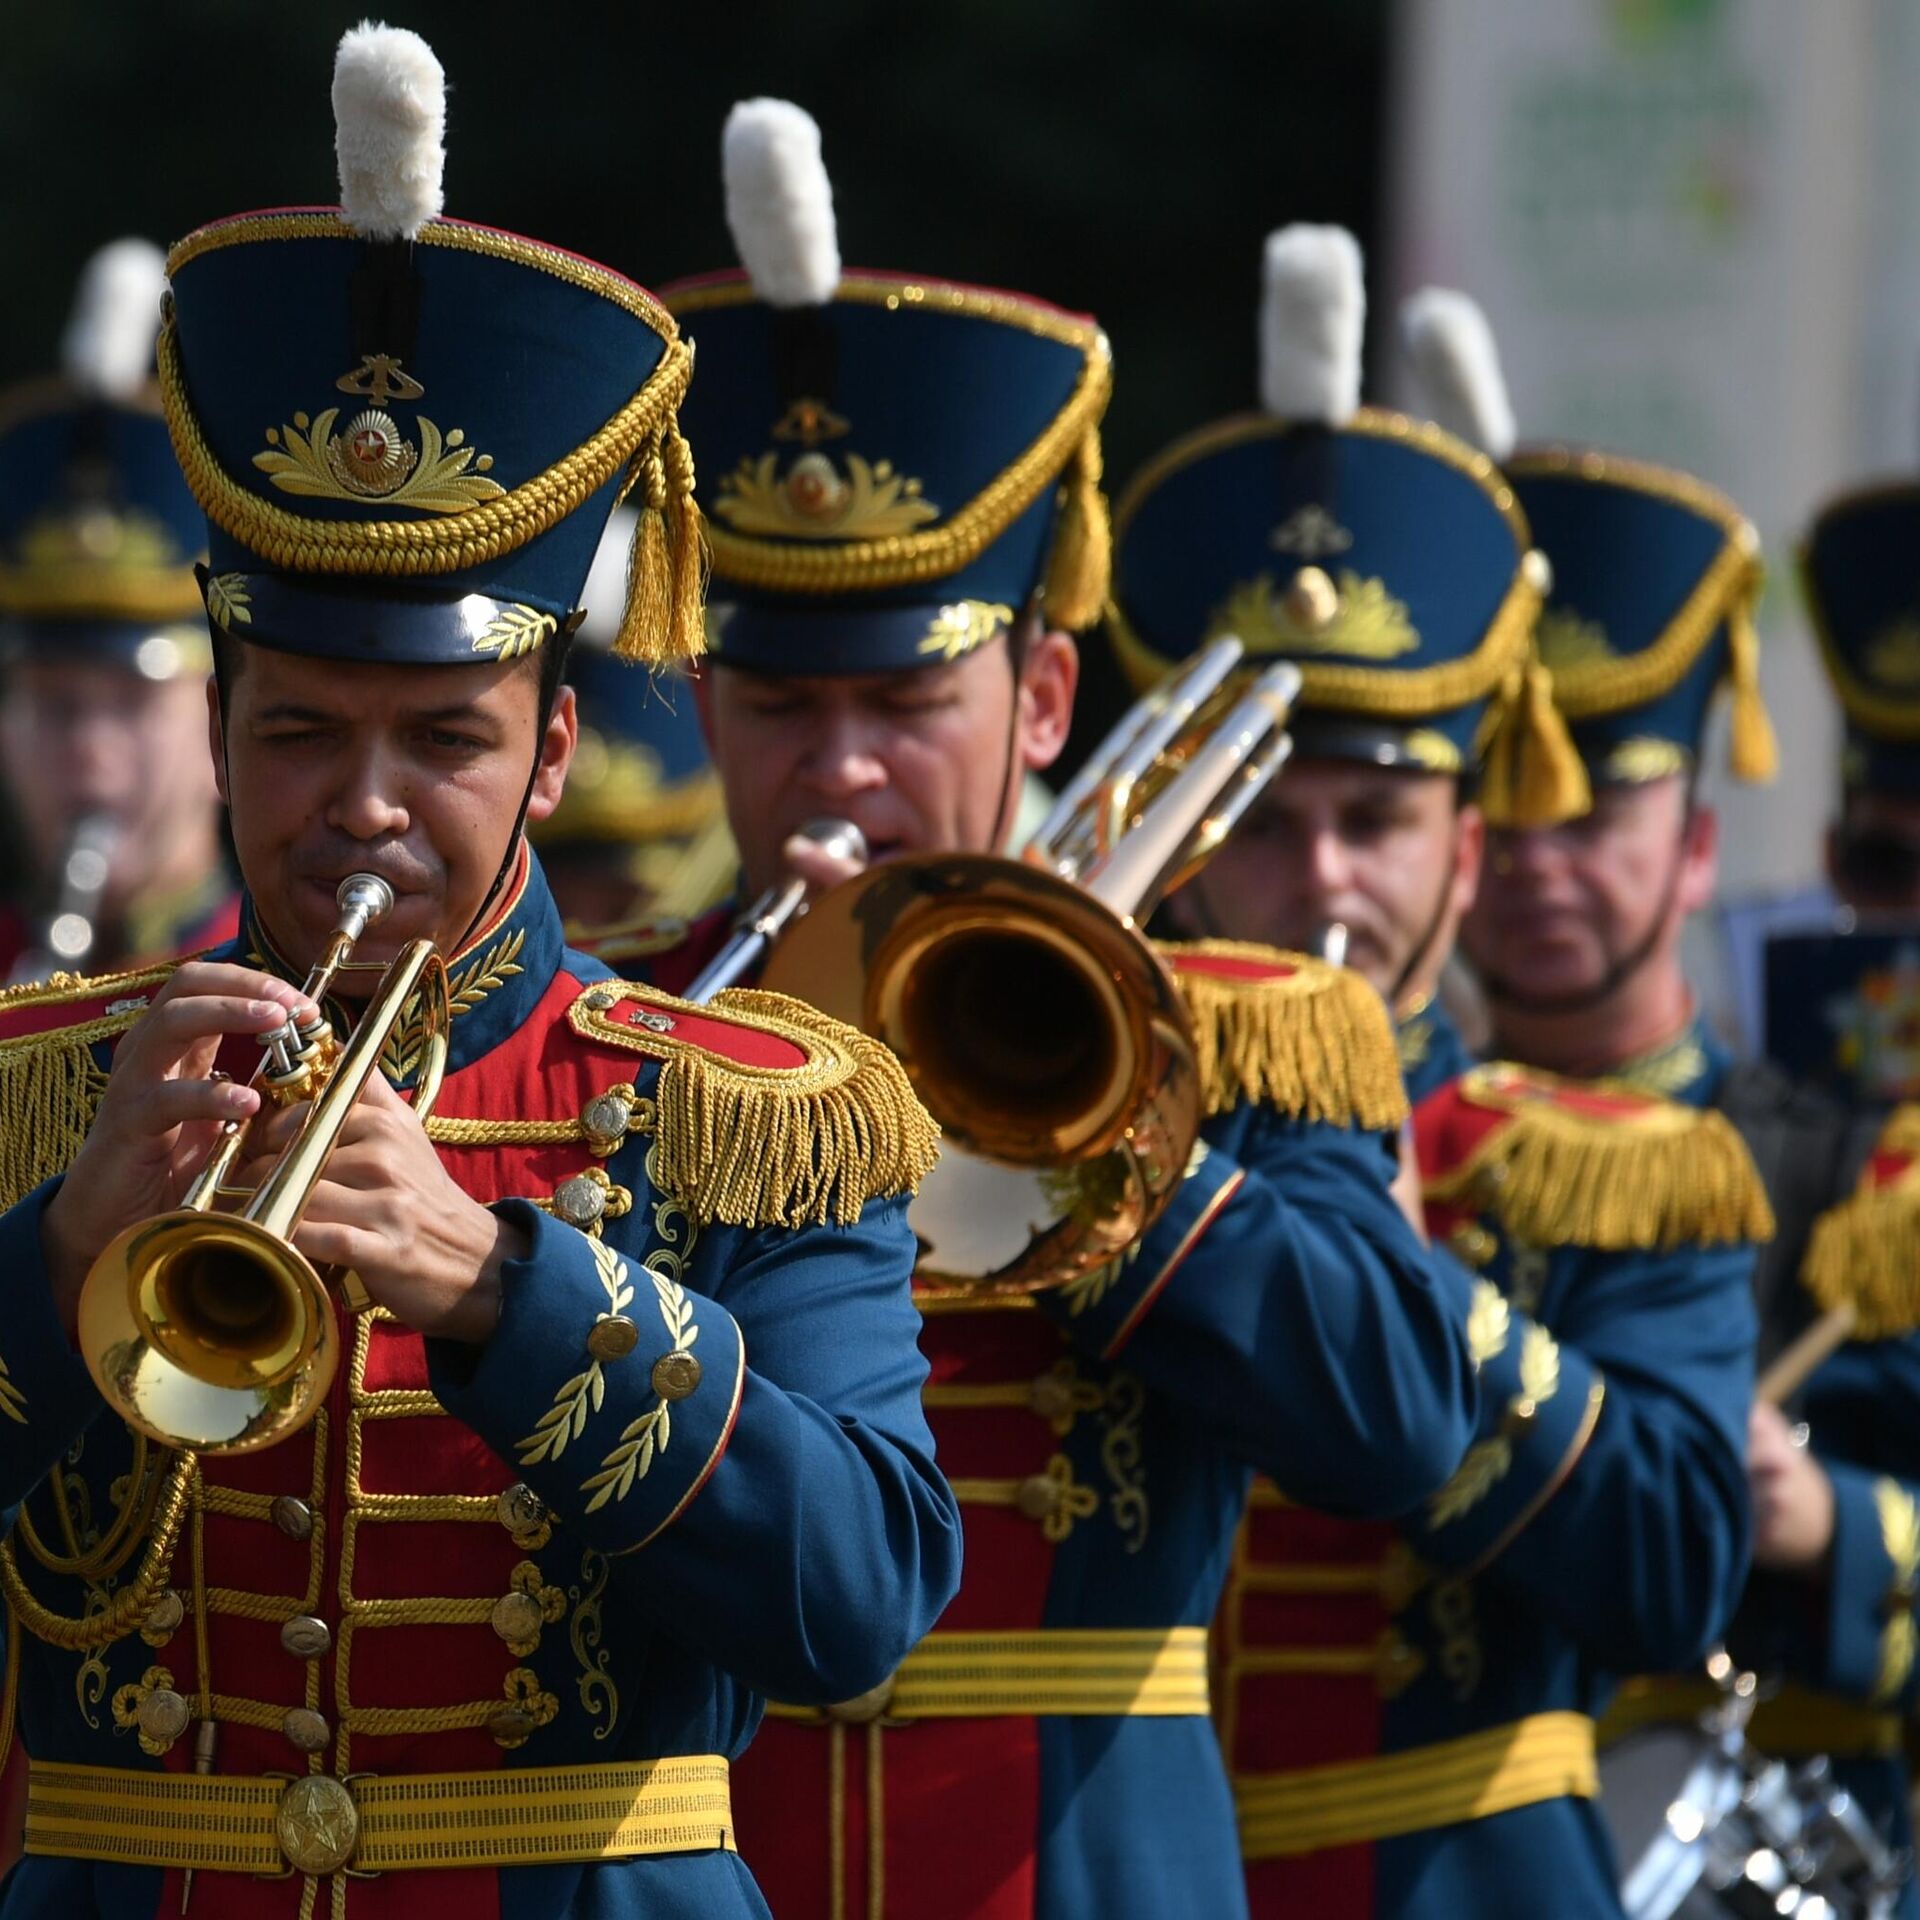 Desfile de bandas militares en el festival Torre Spásskaya de Moscú -  03.09.2022, Sputnik Mundo